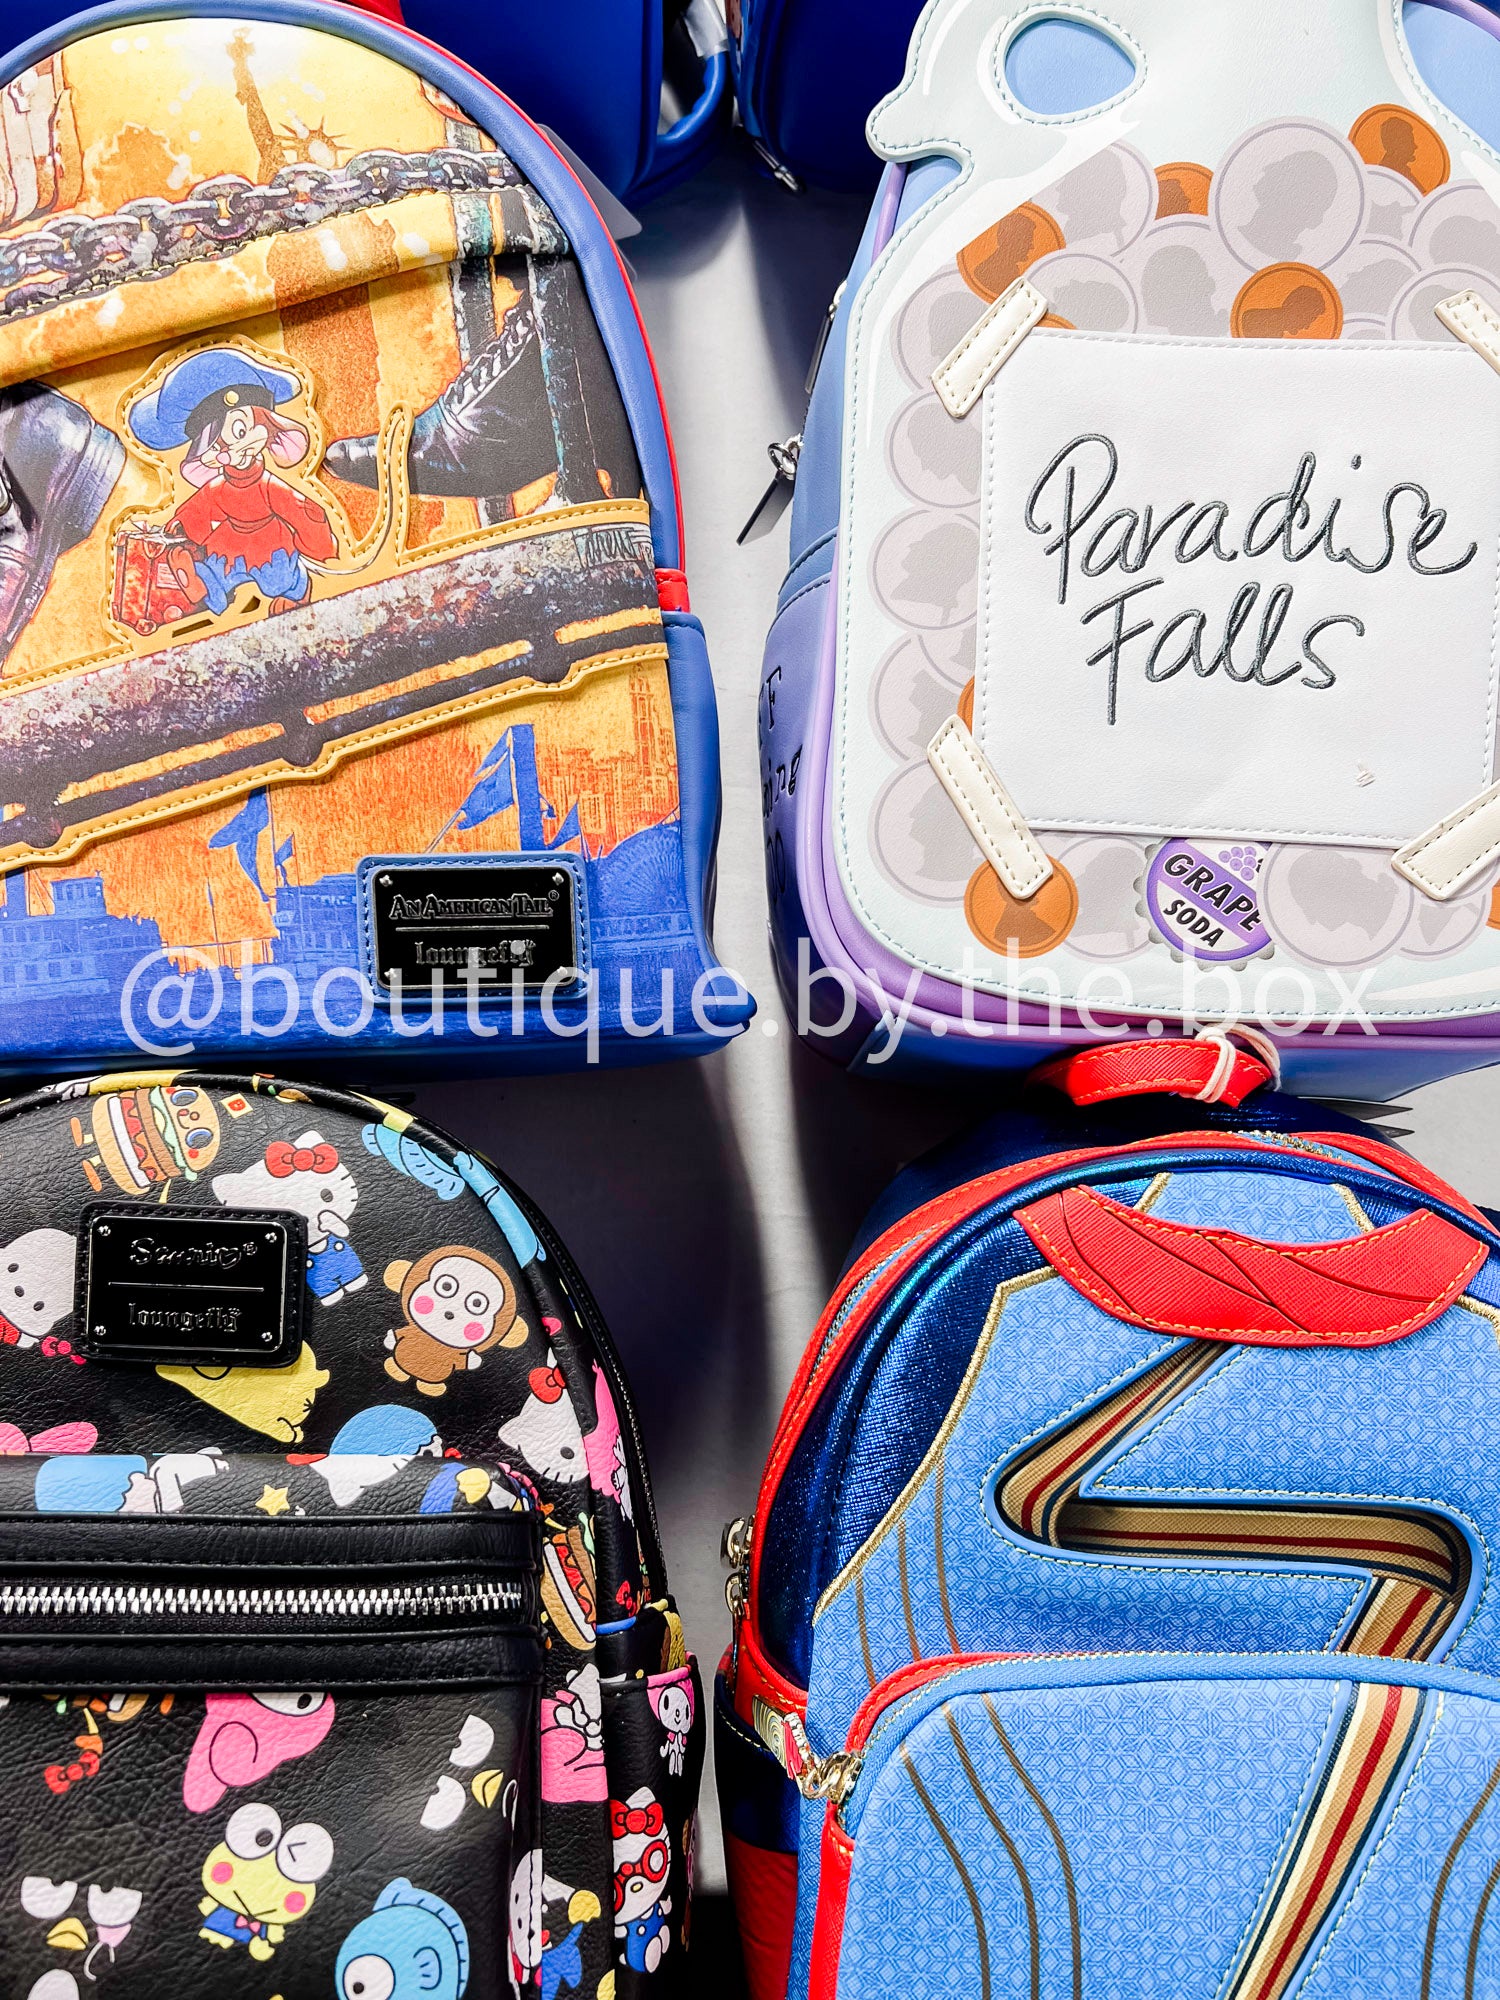 Loungefly Disney Backpacks Variety New Wholesale